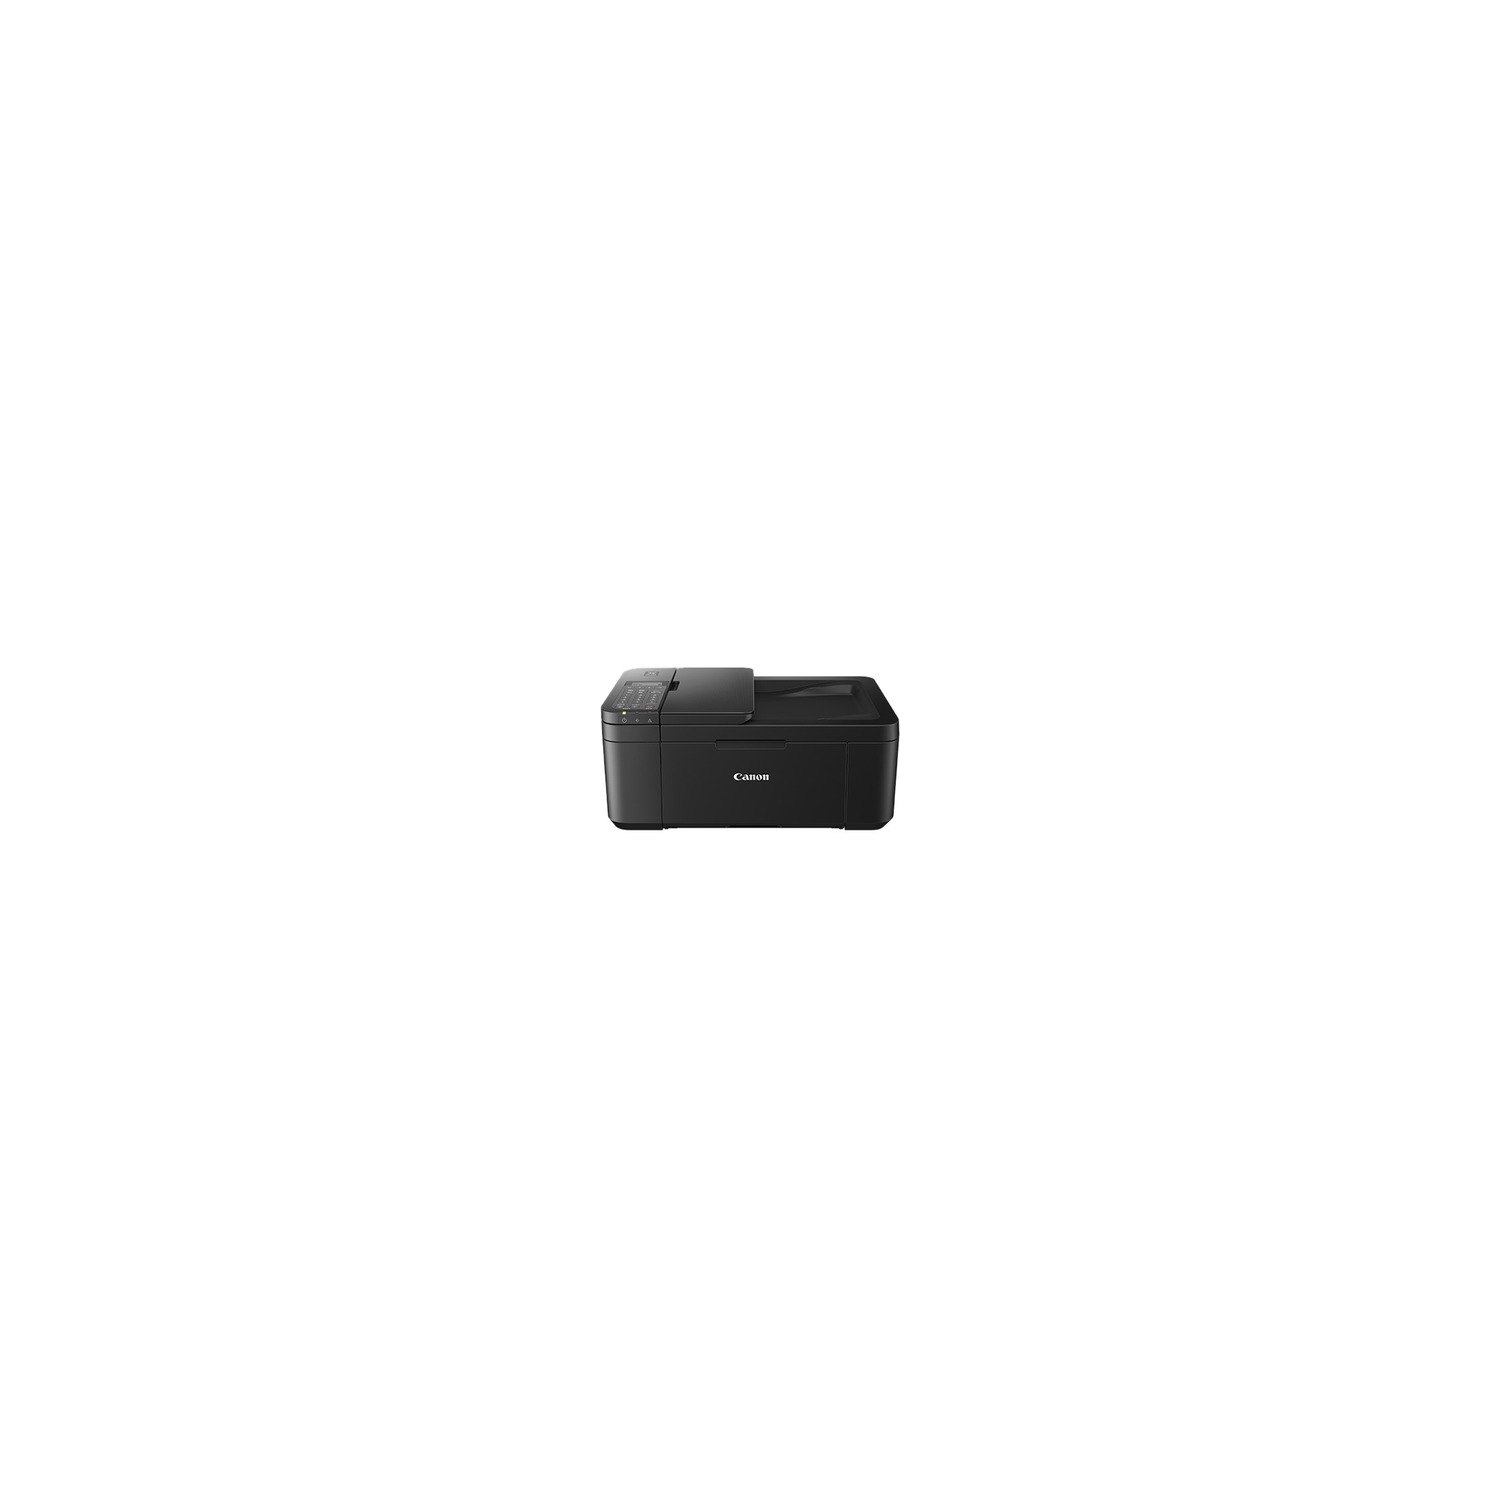 Canon PIXMA TR4520 All-in-One Wireless Inkjet Printer (Black)